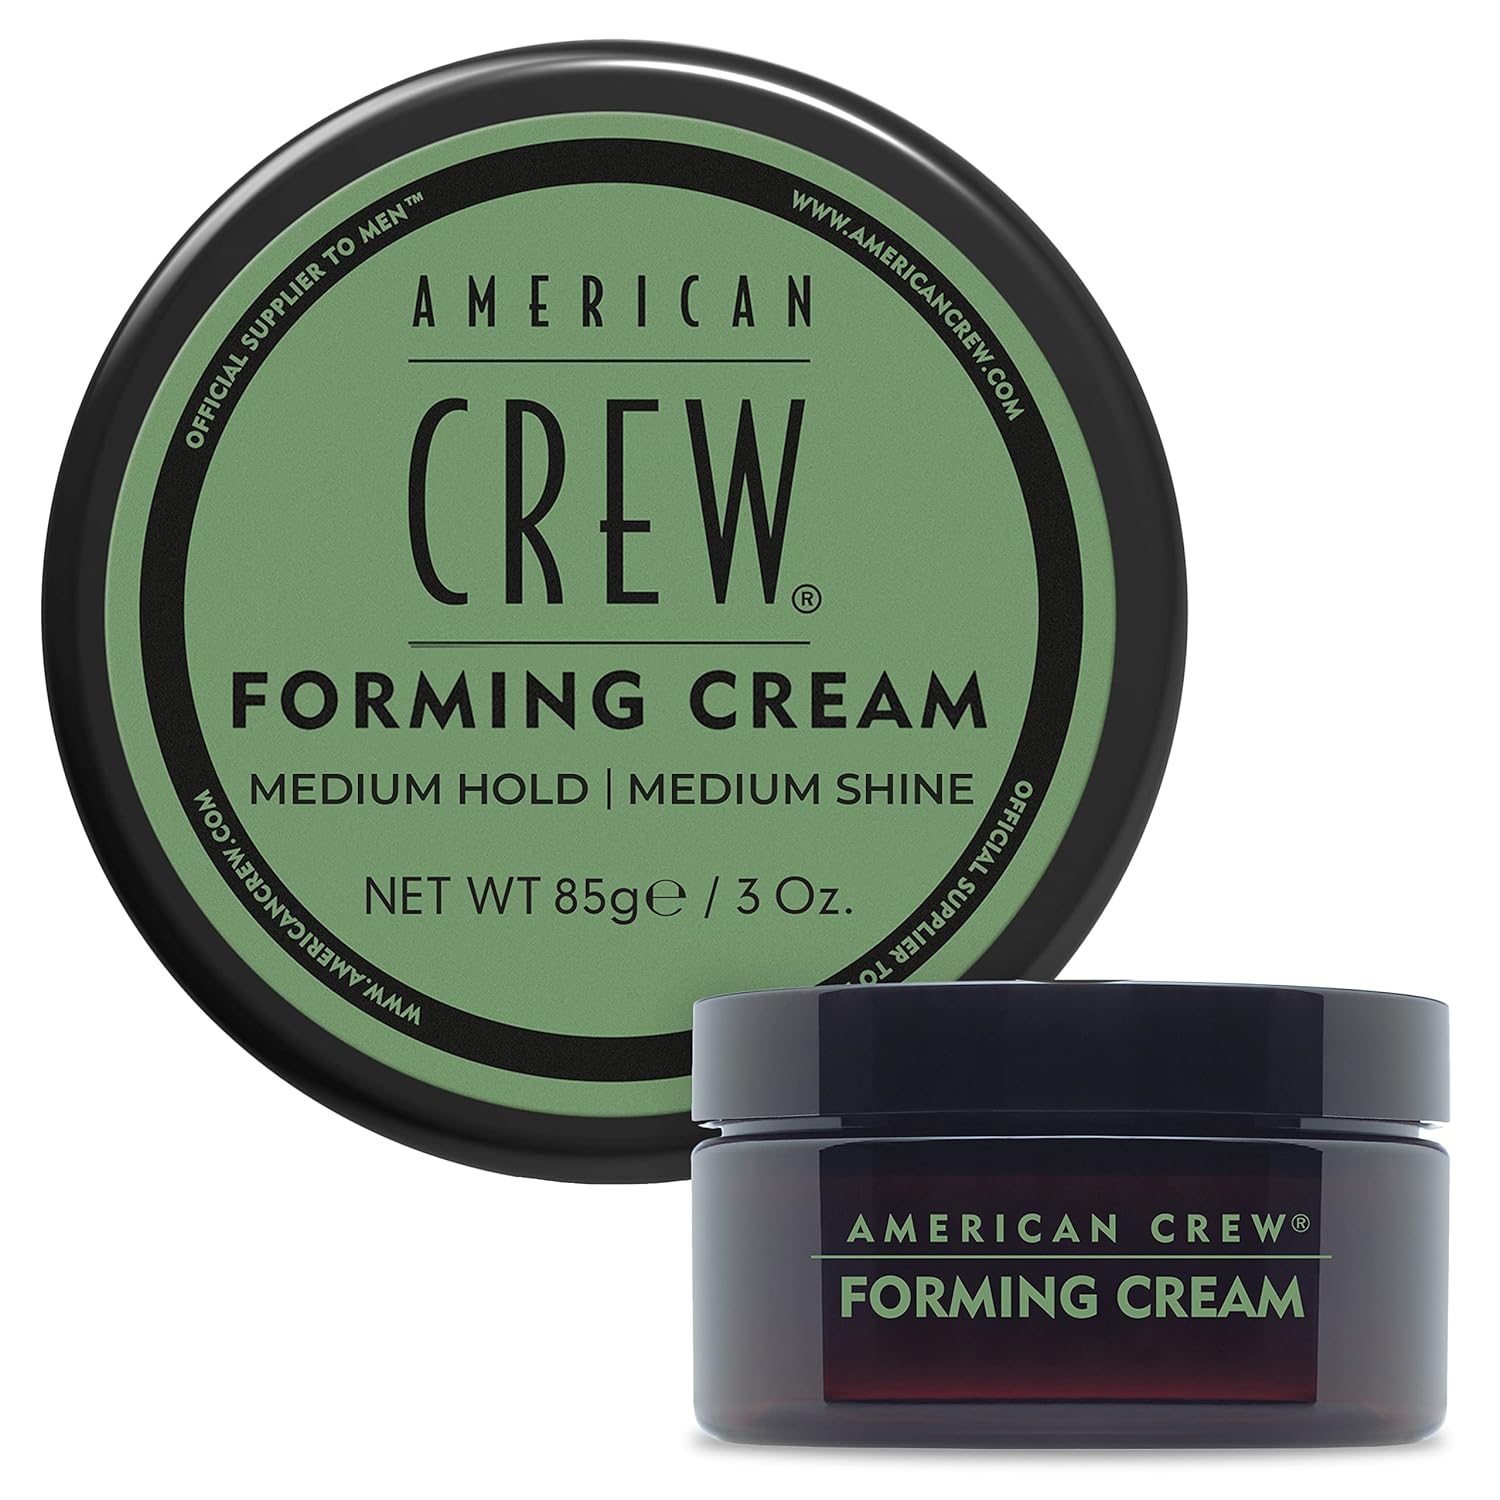 Men's Hair Forming Cream by American Crew, Like Hair Gel with Medium Hold with Medium Shine, 3 Oz